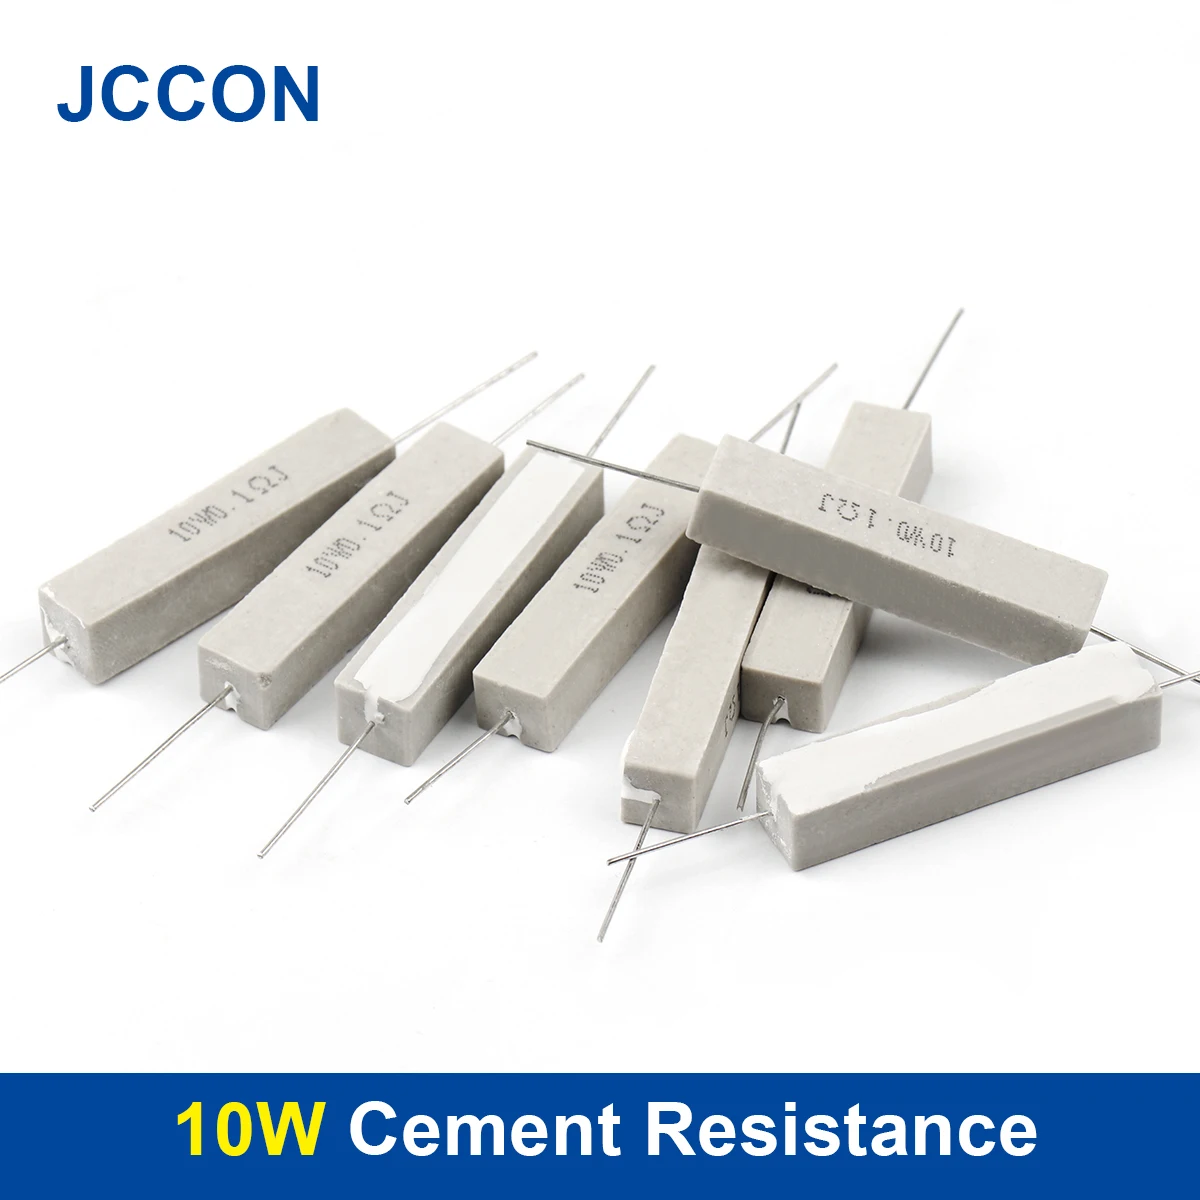 

10Pcs 10W Cement Resistor 5% 0.1R~10K 0.1R 0.15R 0.22R 0.25R 0.33R 0.47R 1R 1.5R 2.2R 1K 2K 10K ohm Ceramic Cement Resistance